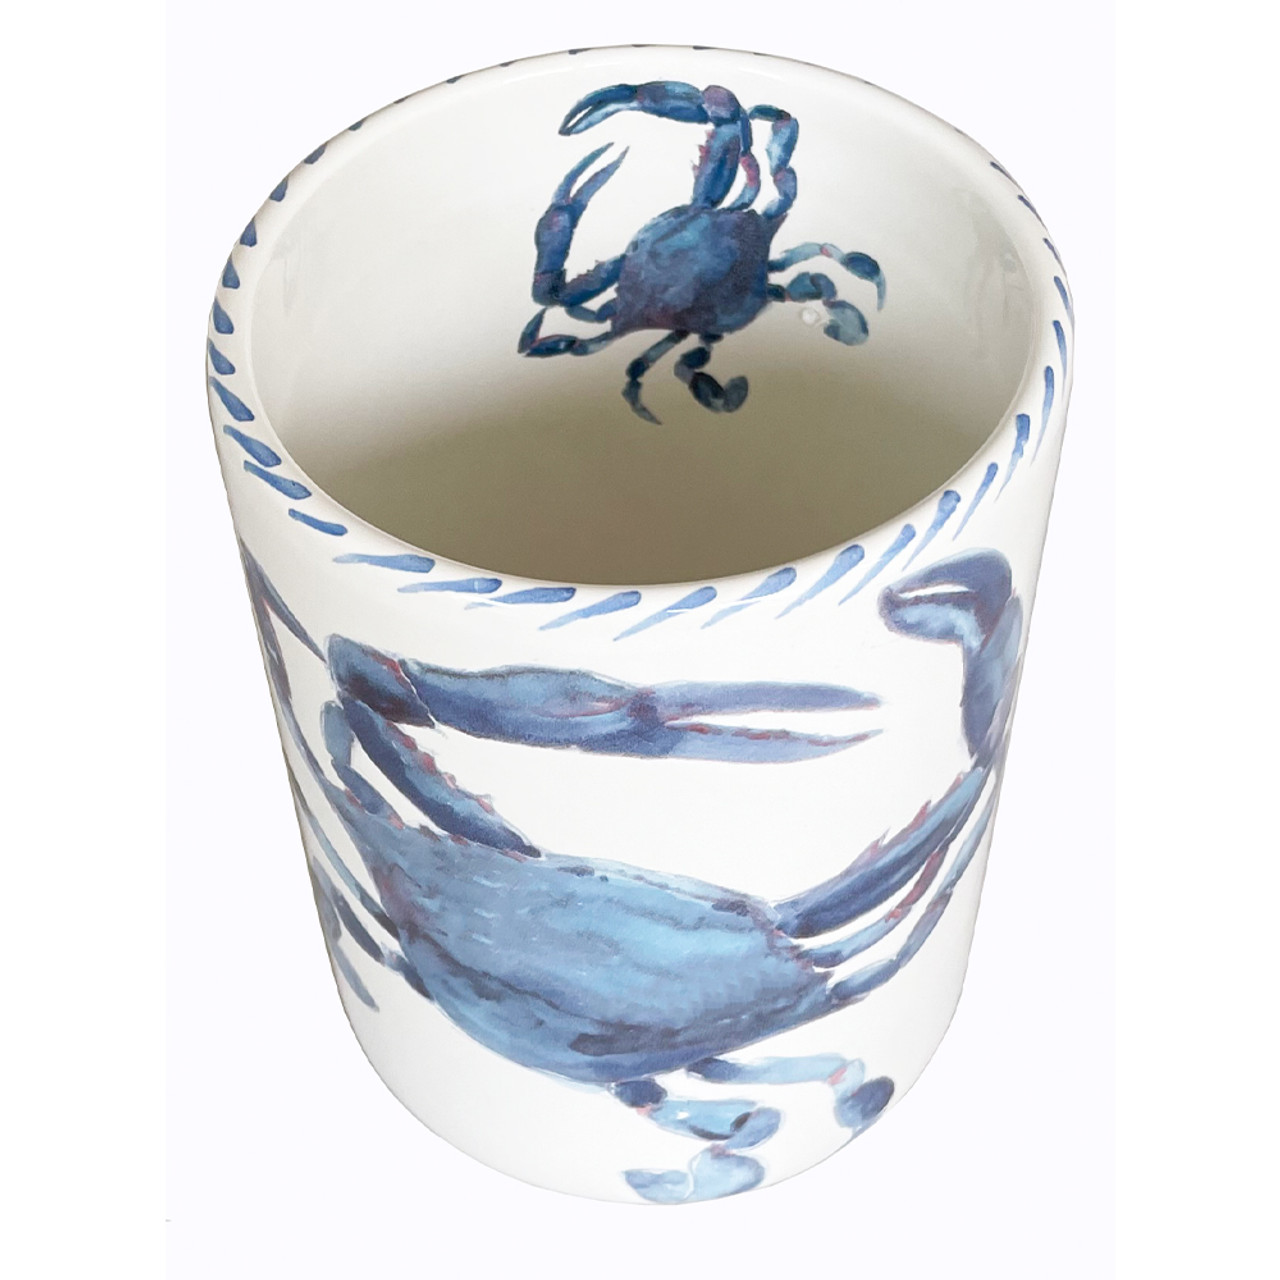 Utensil Holder - Crab - Great Bay Pottery